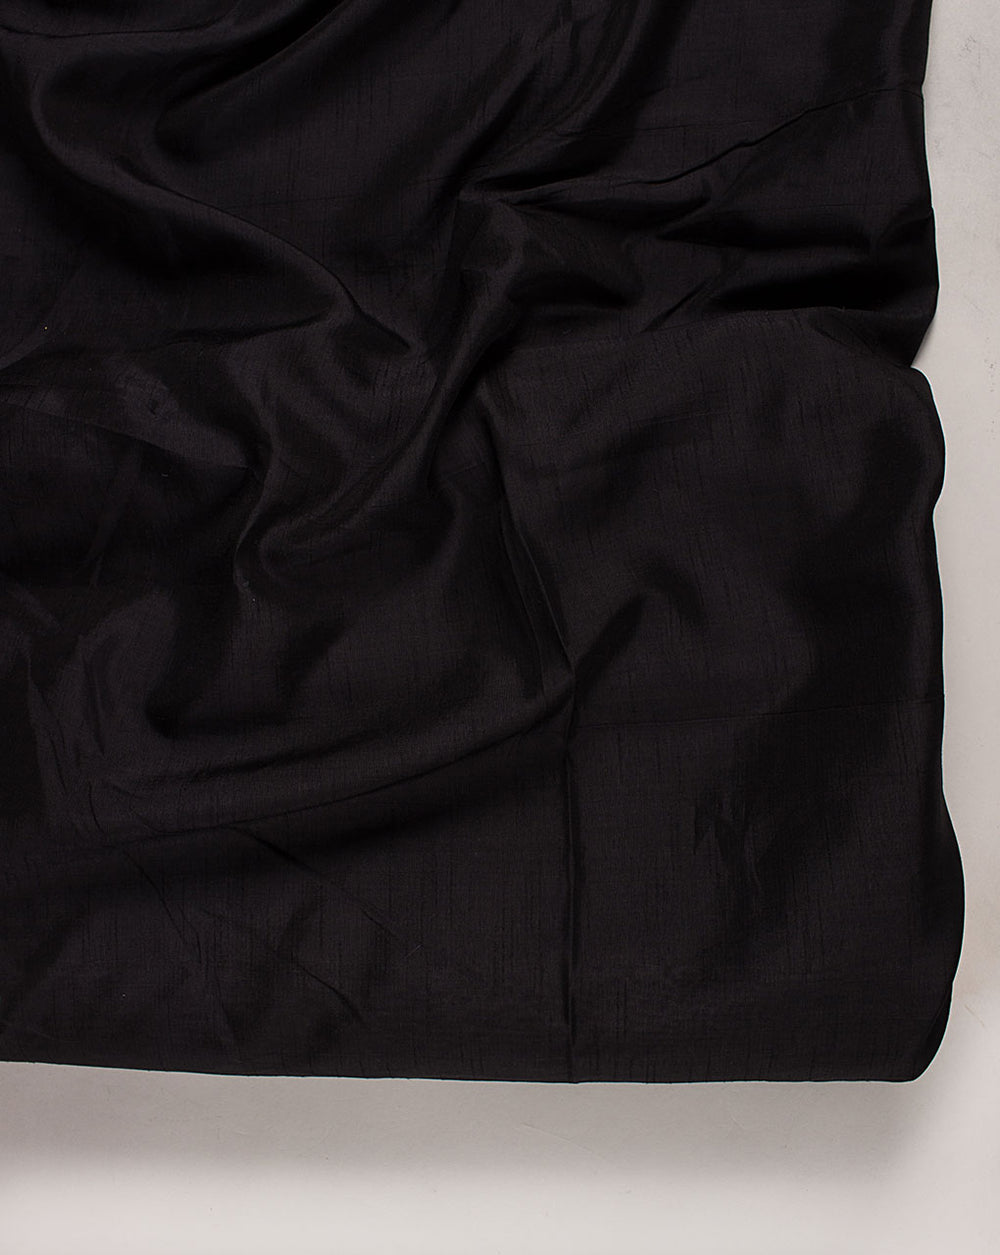 Raw Silk Fabric Online - Buy Raw Silk Fabric @ Rs. 697/Mtr | Fabriclore